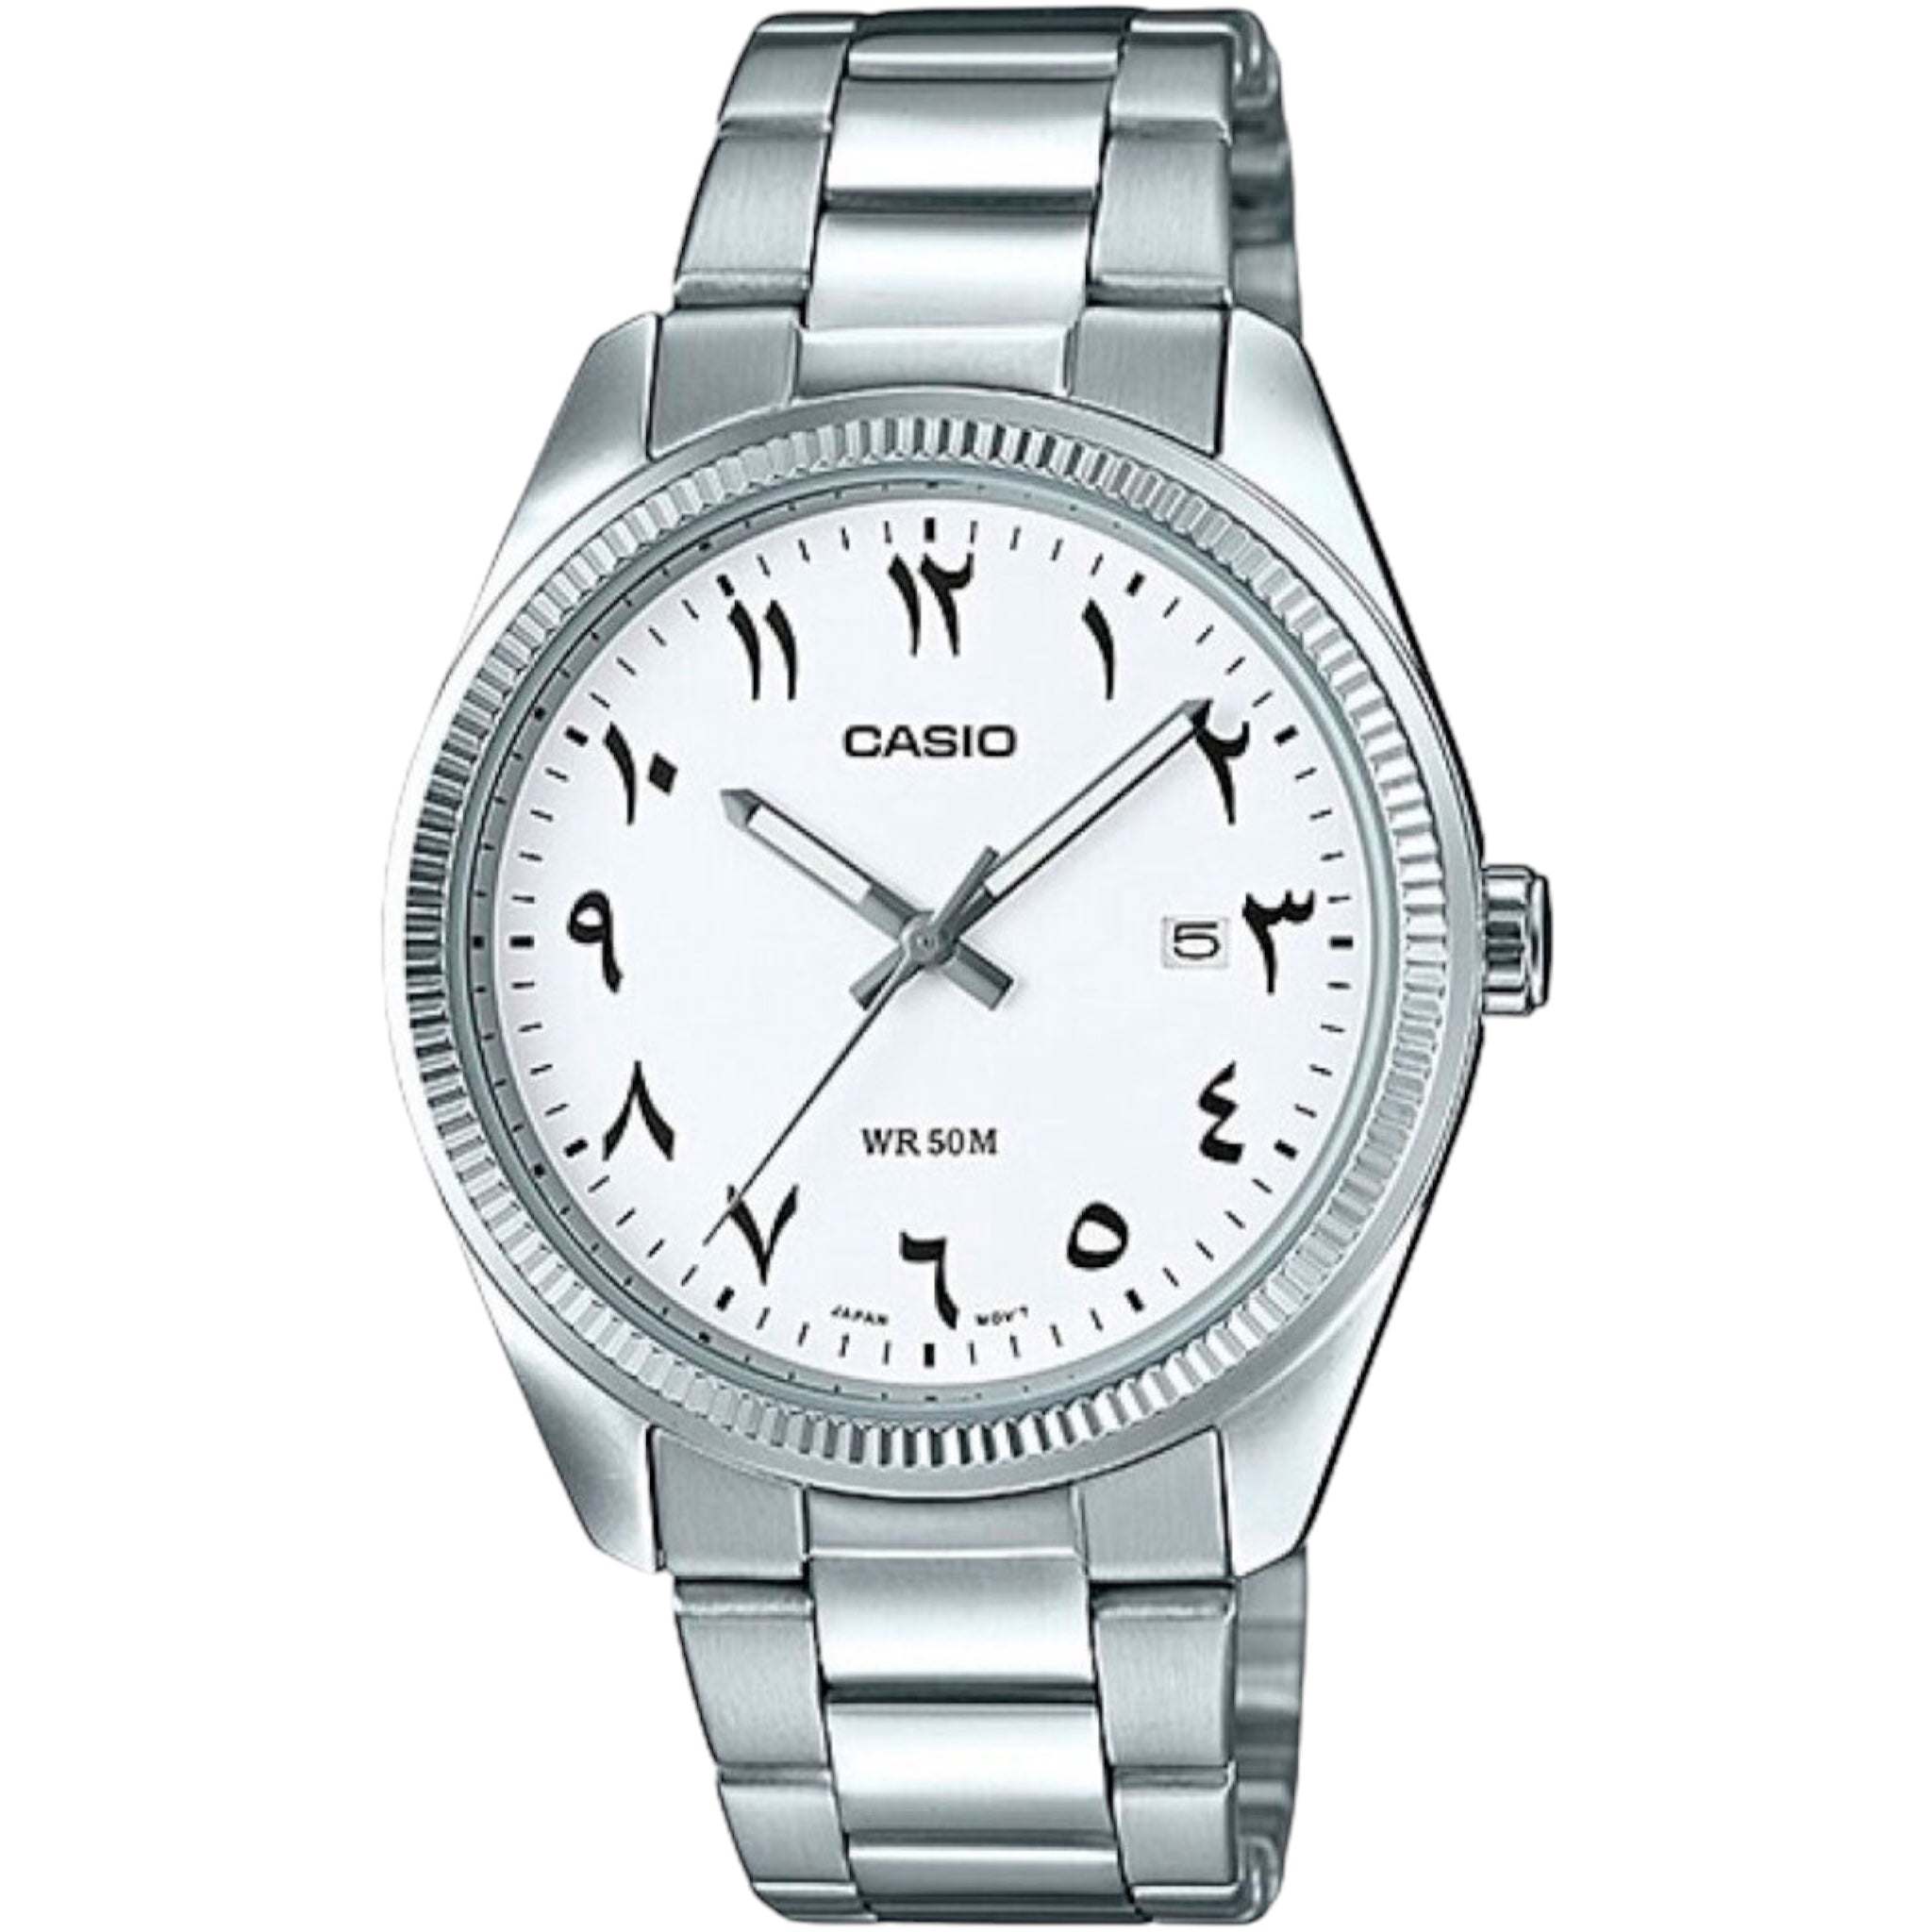 Casio Arabic Dial Men's Watch MTP-1302D-7B3 White